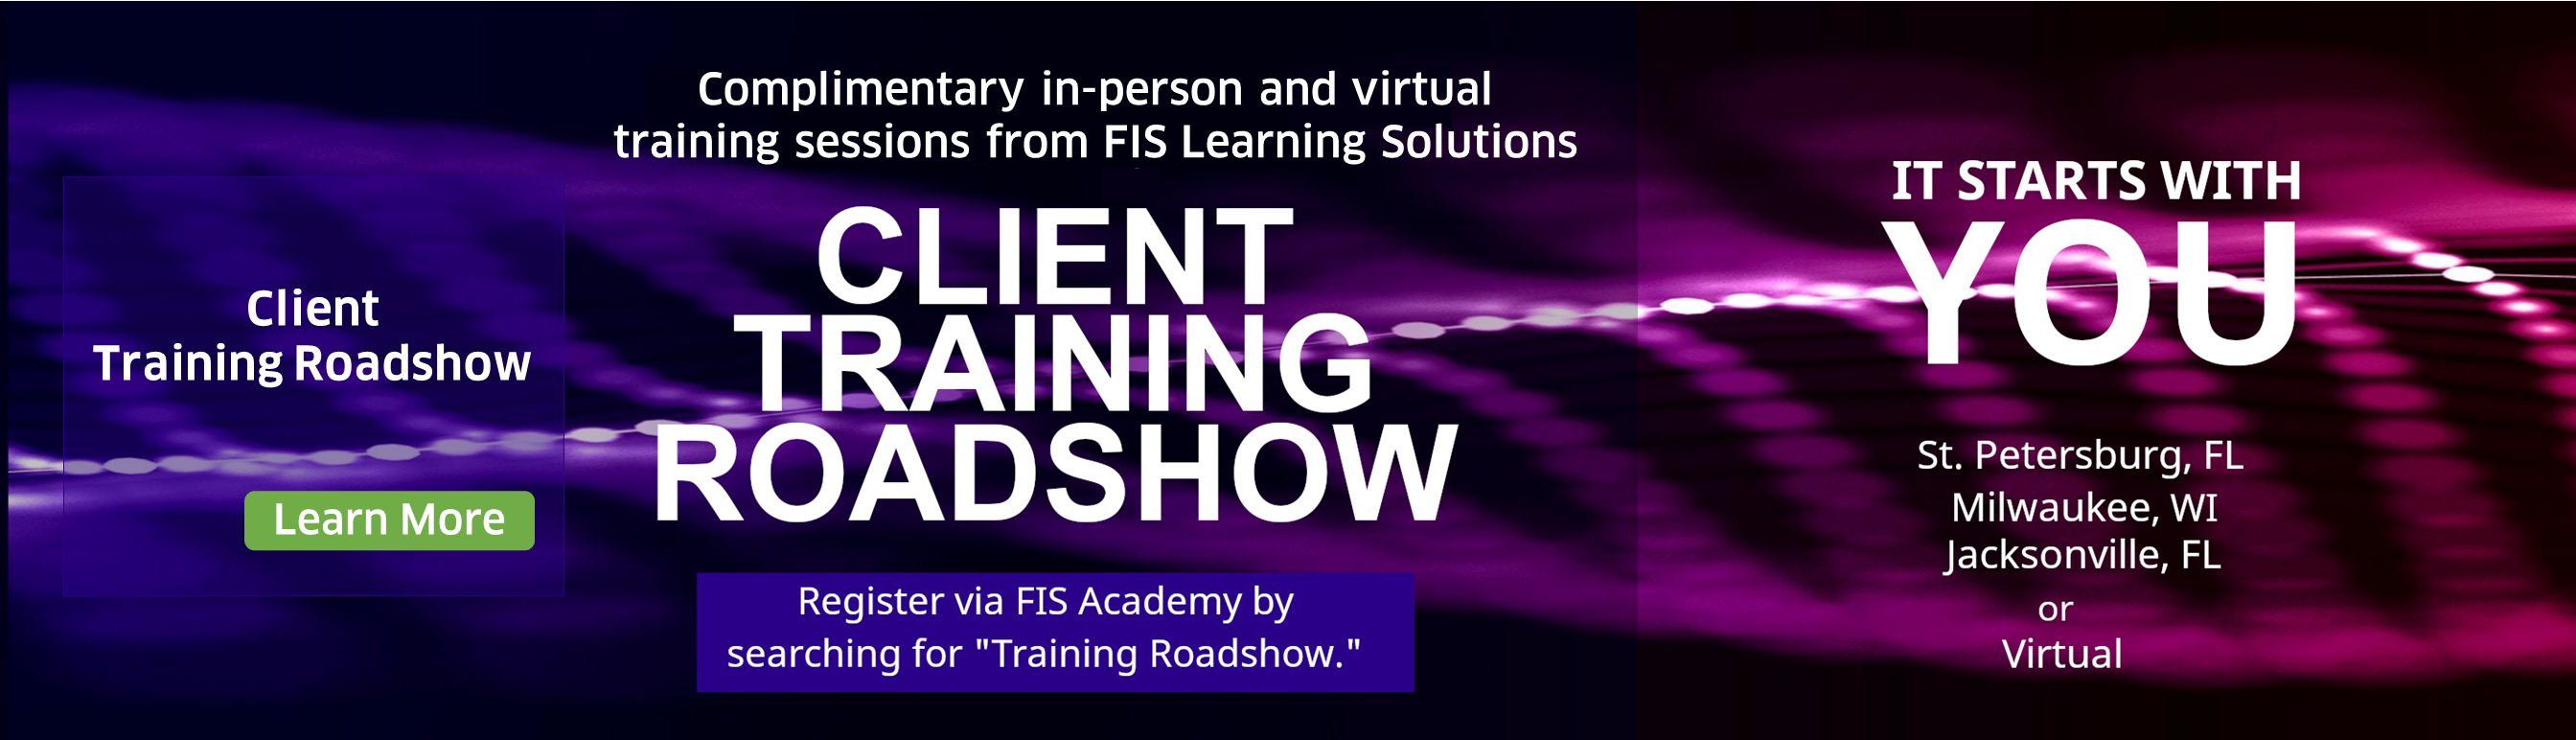 Client Training Roadshow